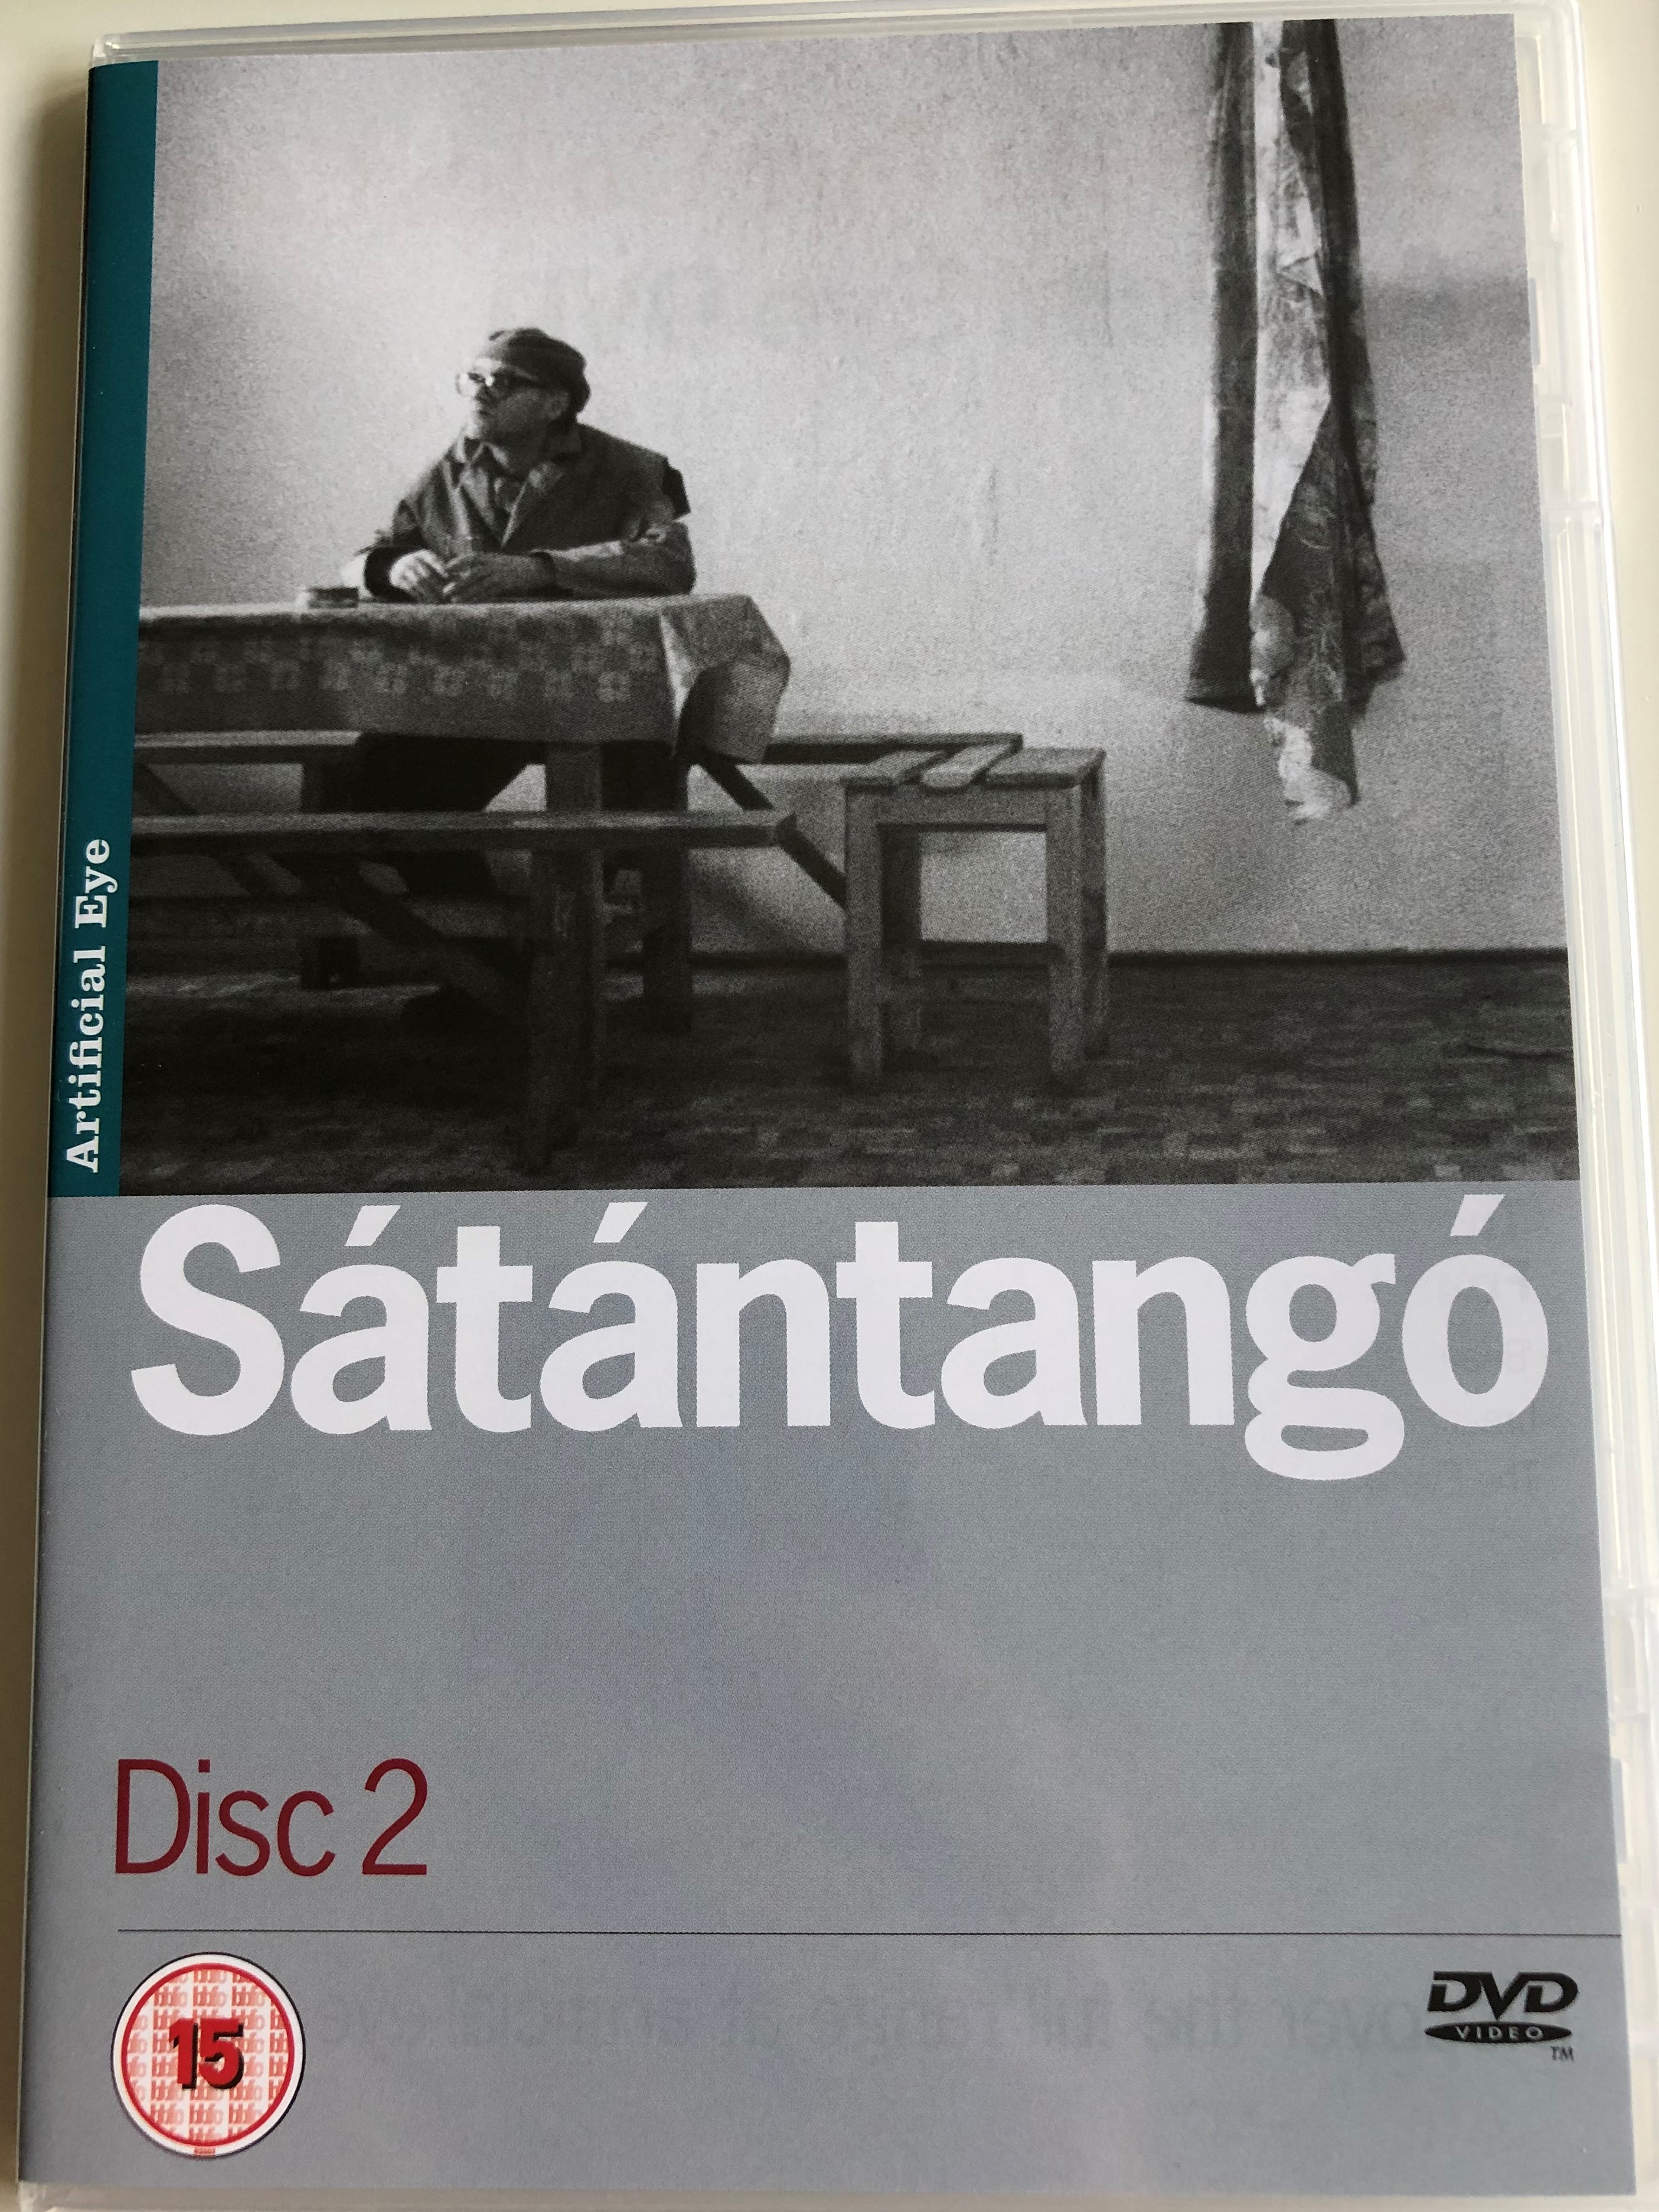 s-t-ntang-disc-2.-dvd-1994-satan-s-tango-directed-by-b-la-tarr-starring-mih-ly-v-g-putyi-horv-th-l-szl-lugossy-chapters-4-6-1-.jpg